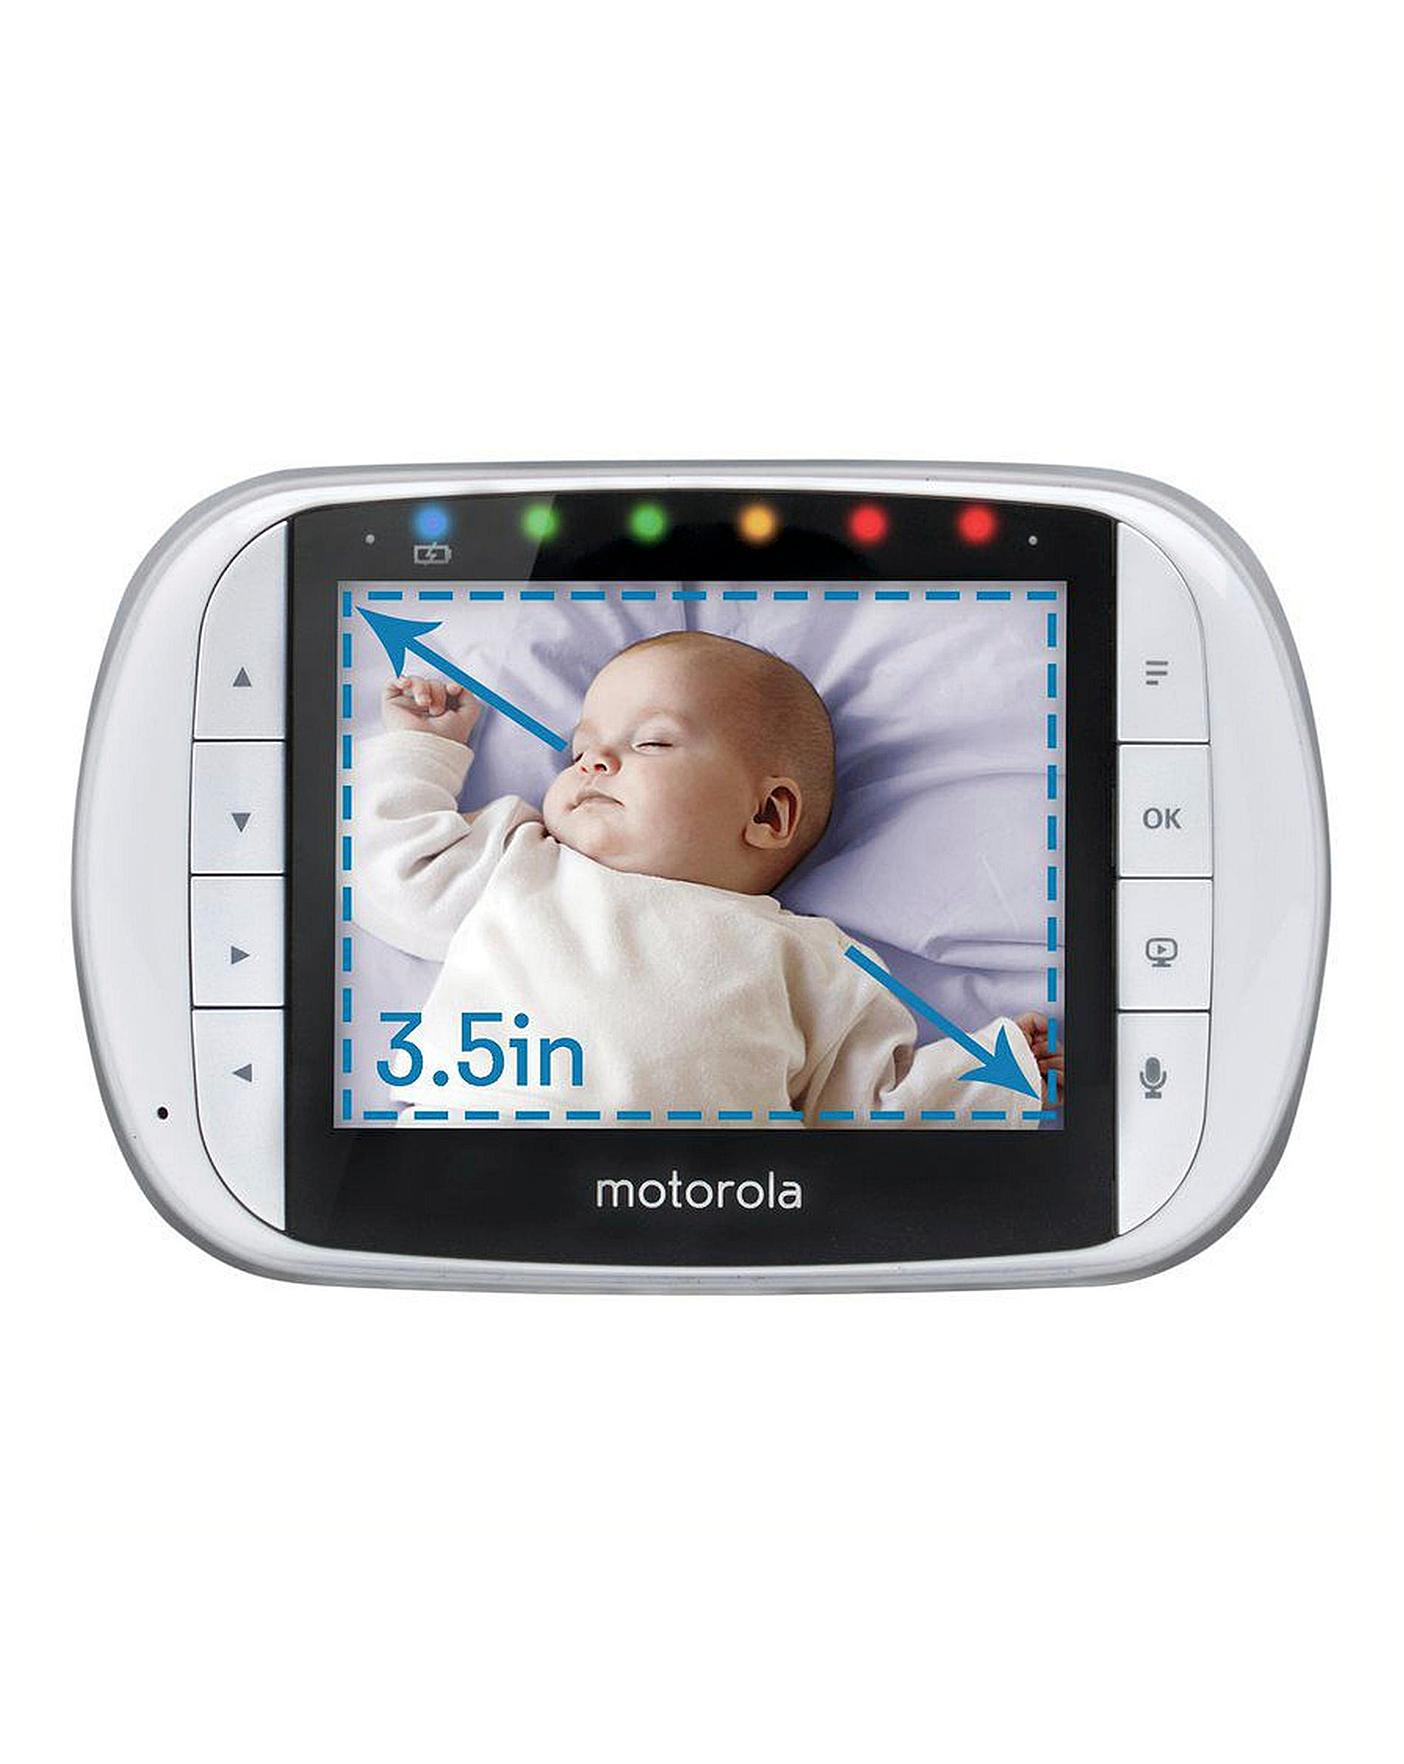 2.4 ghz fhss baby monitor